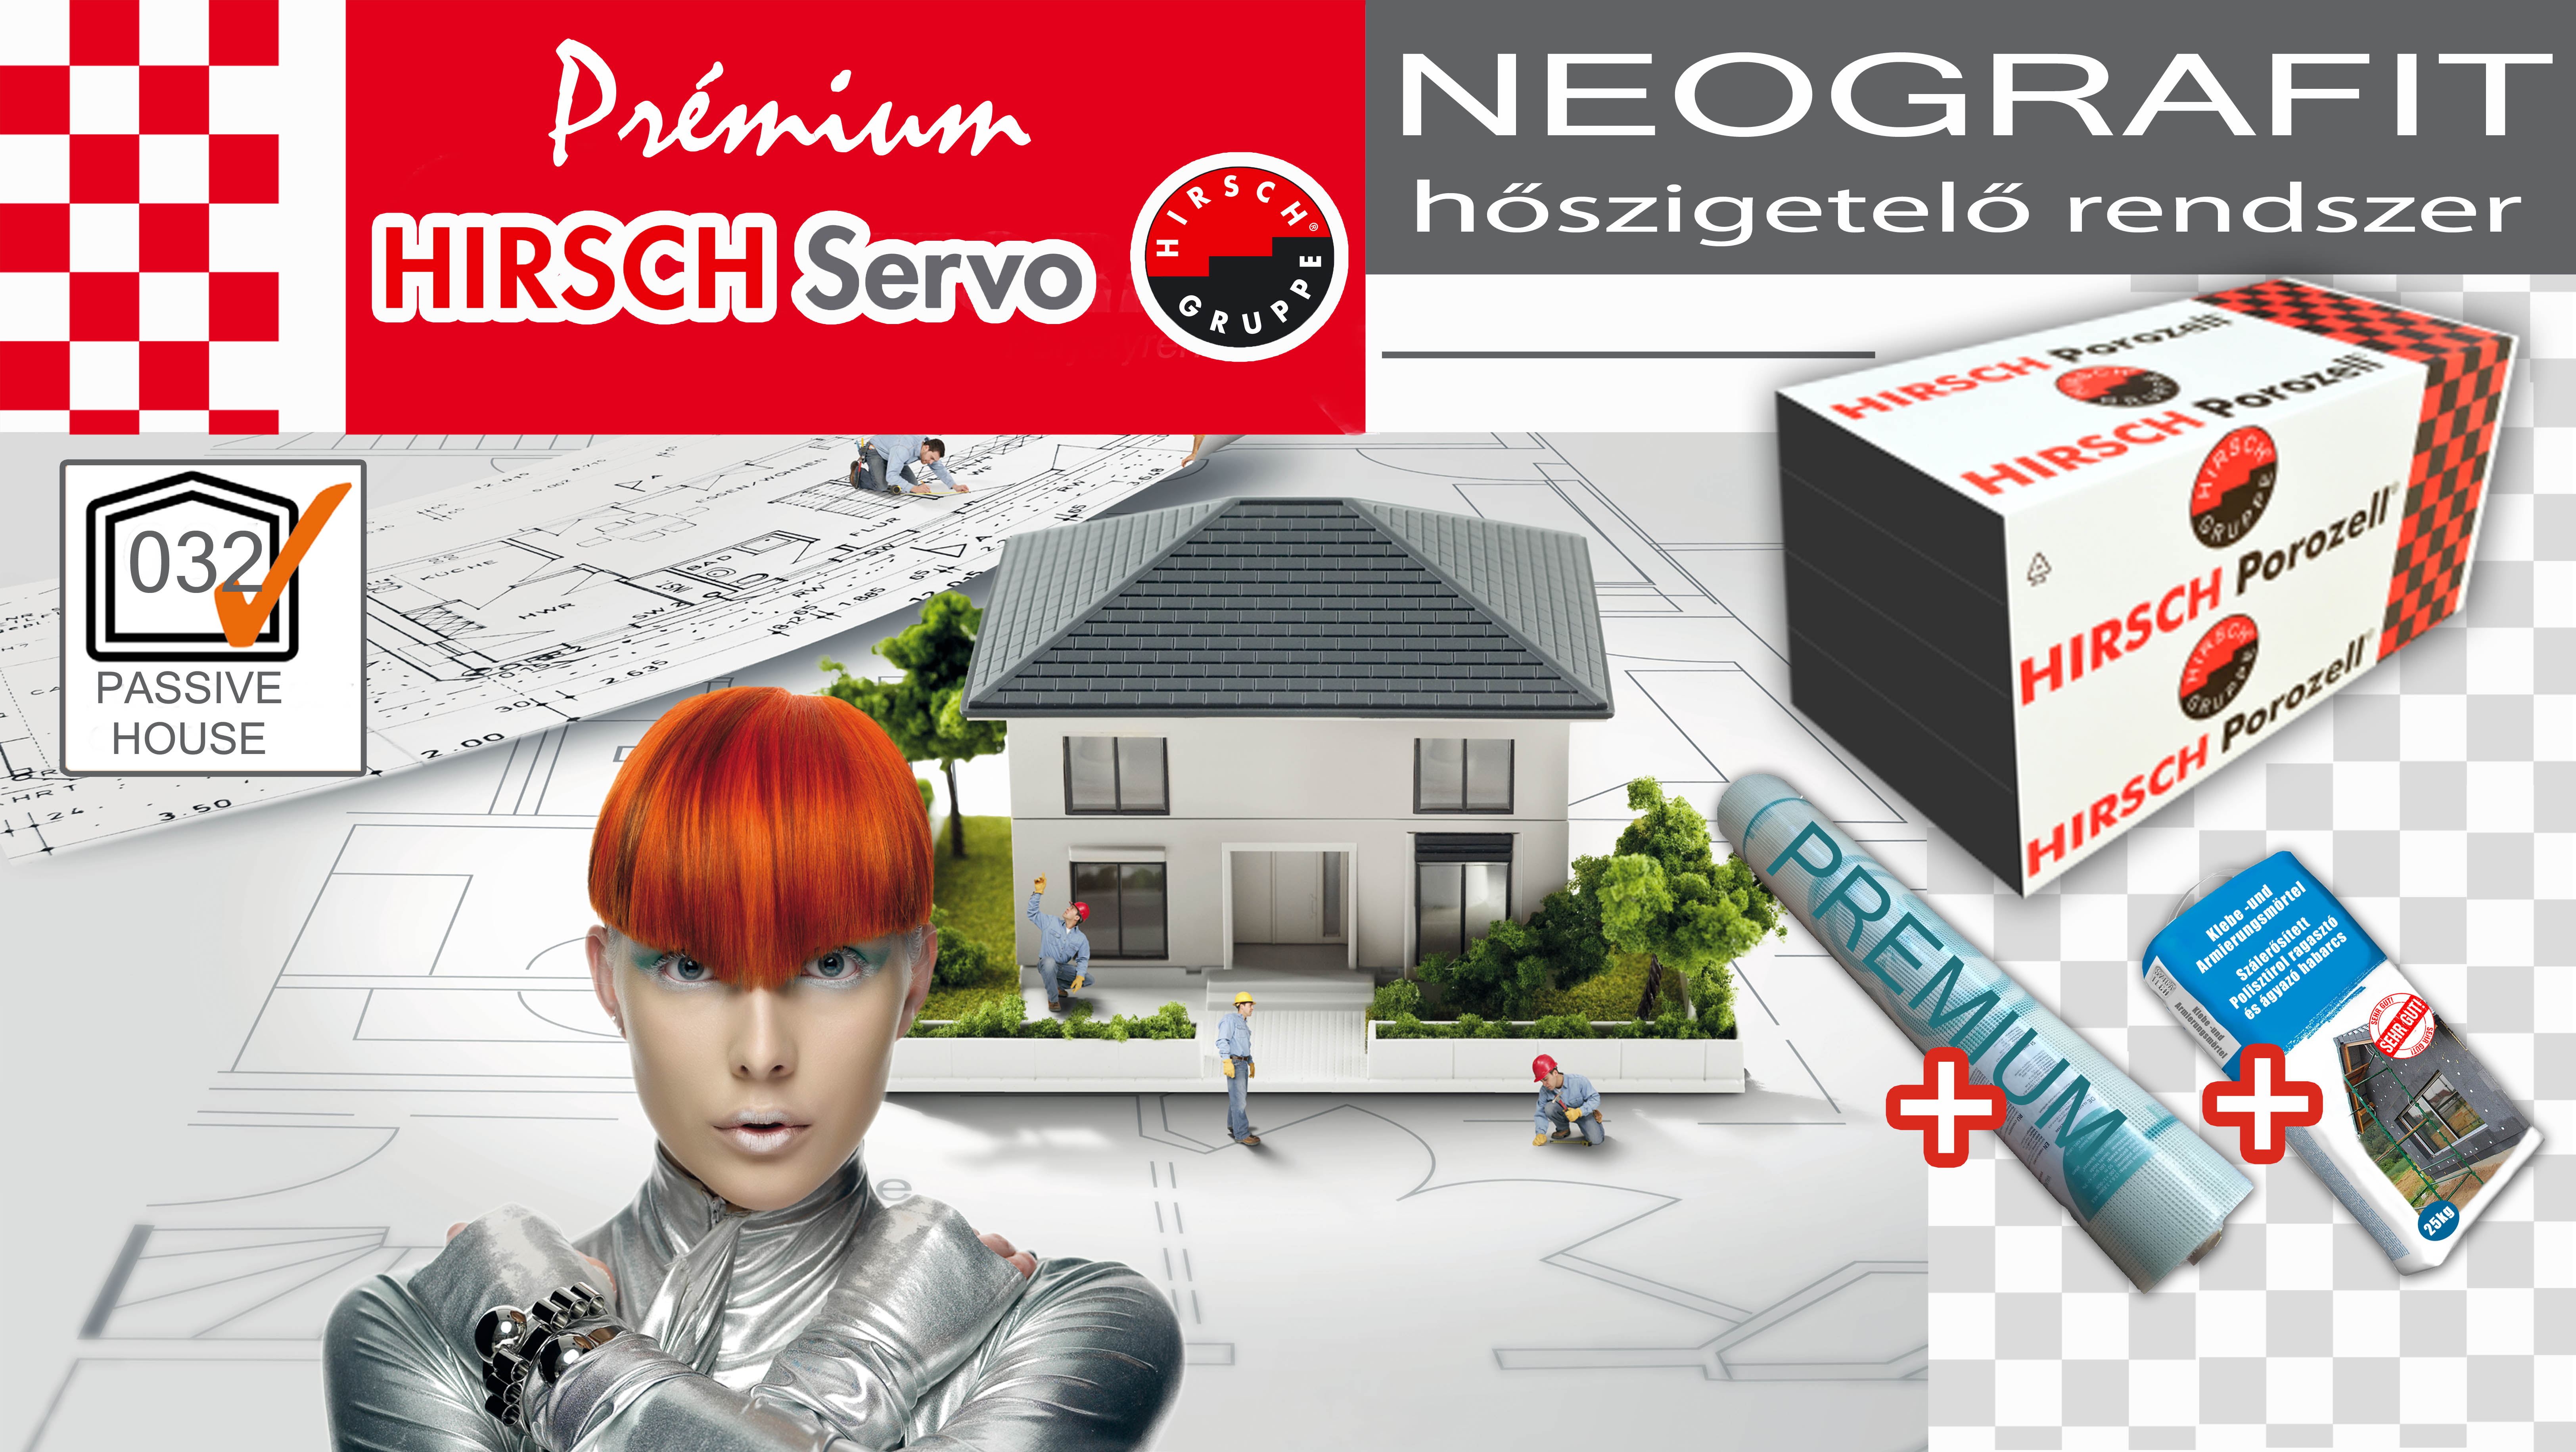 prémium-hirsch-neo-grafitos-rendszer-akcio-2018-05